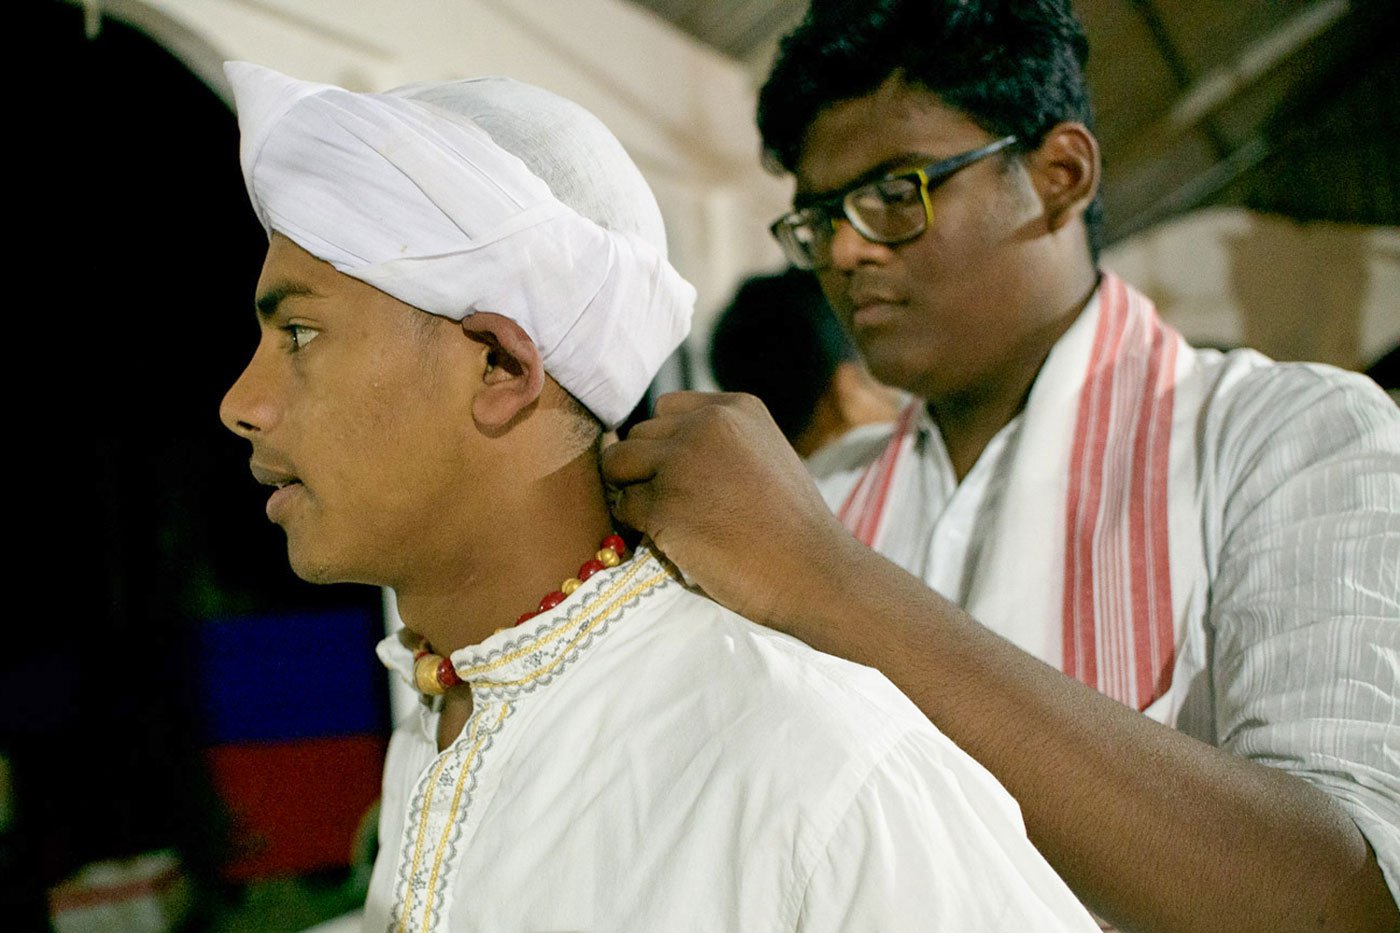 Xuruj, a gayan in the group, arranges the motamoni mala around the neck of his fellow artist Subhashish